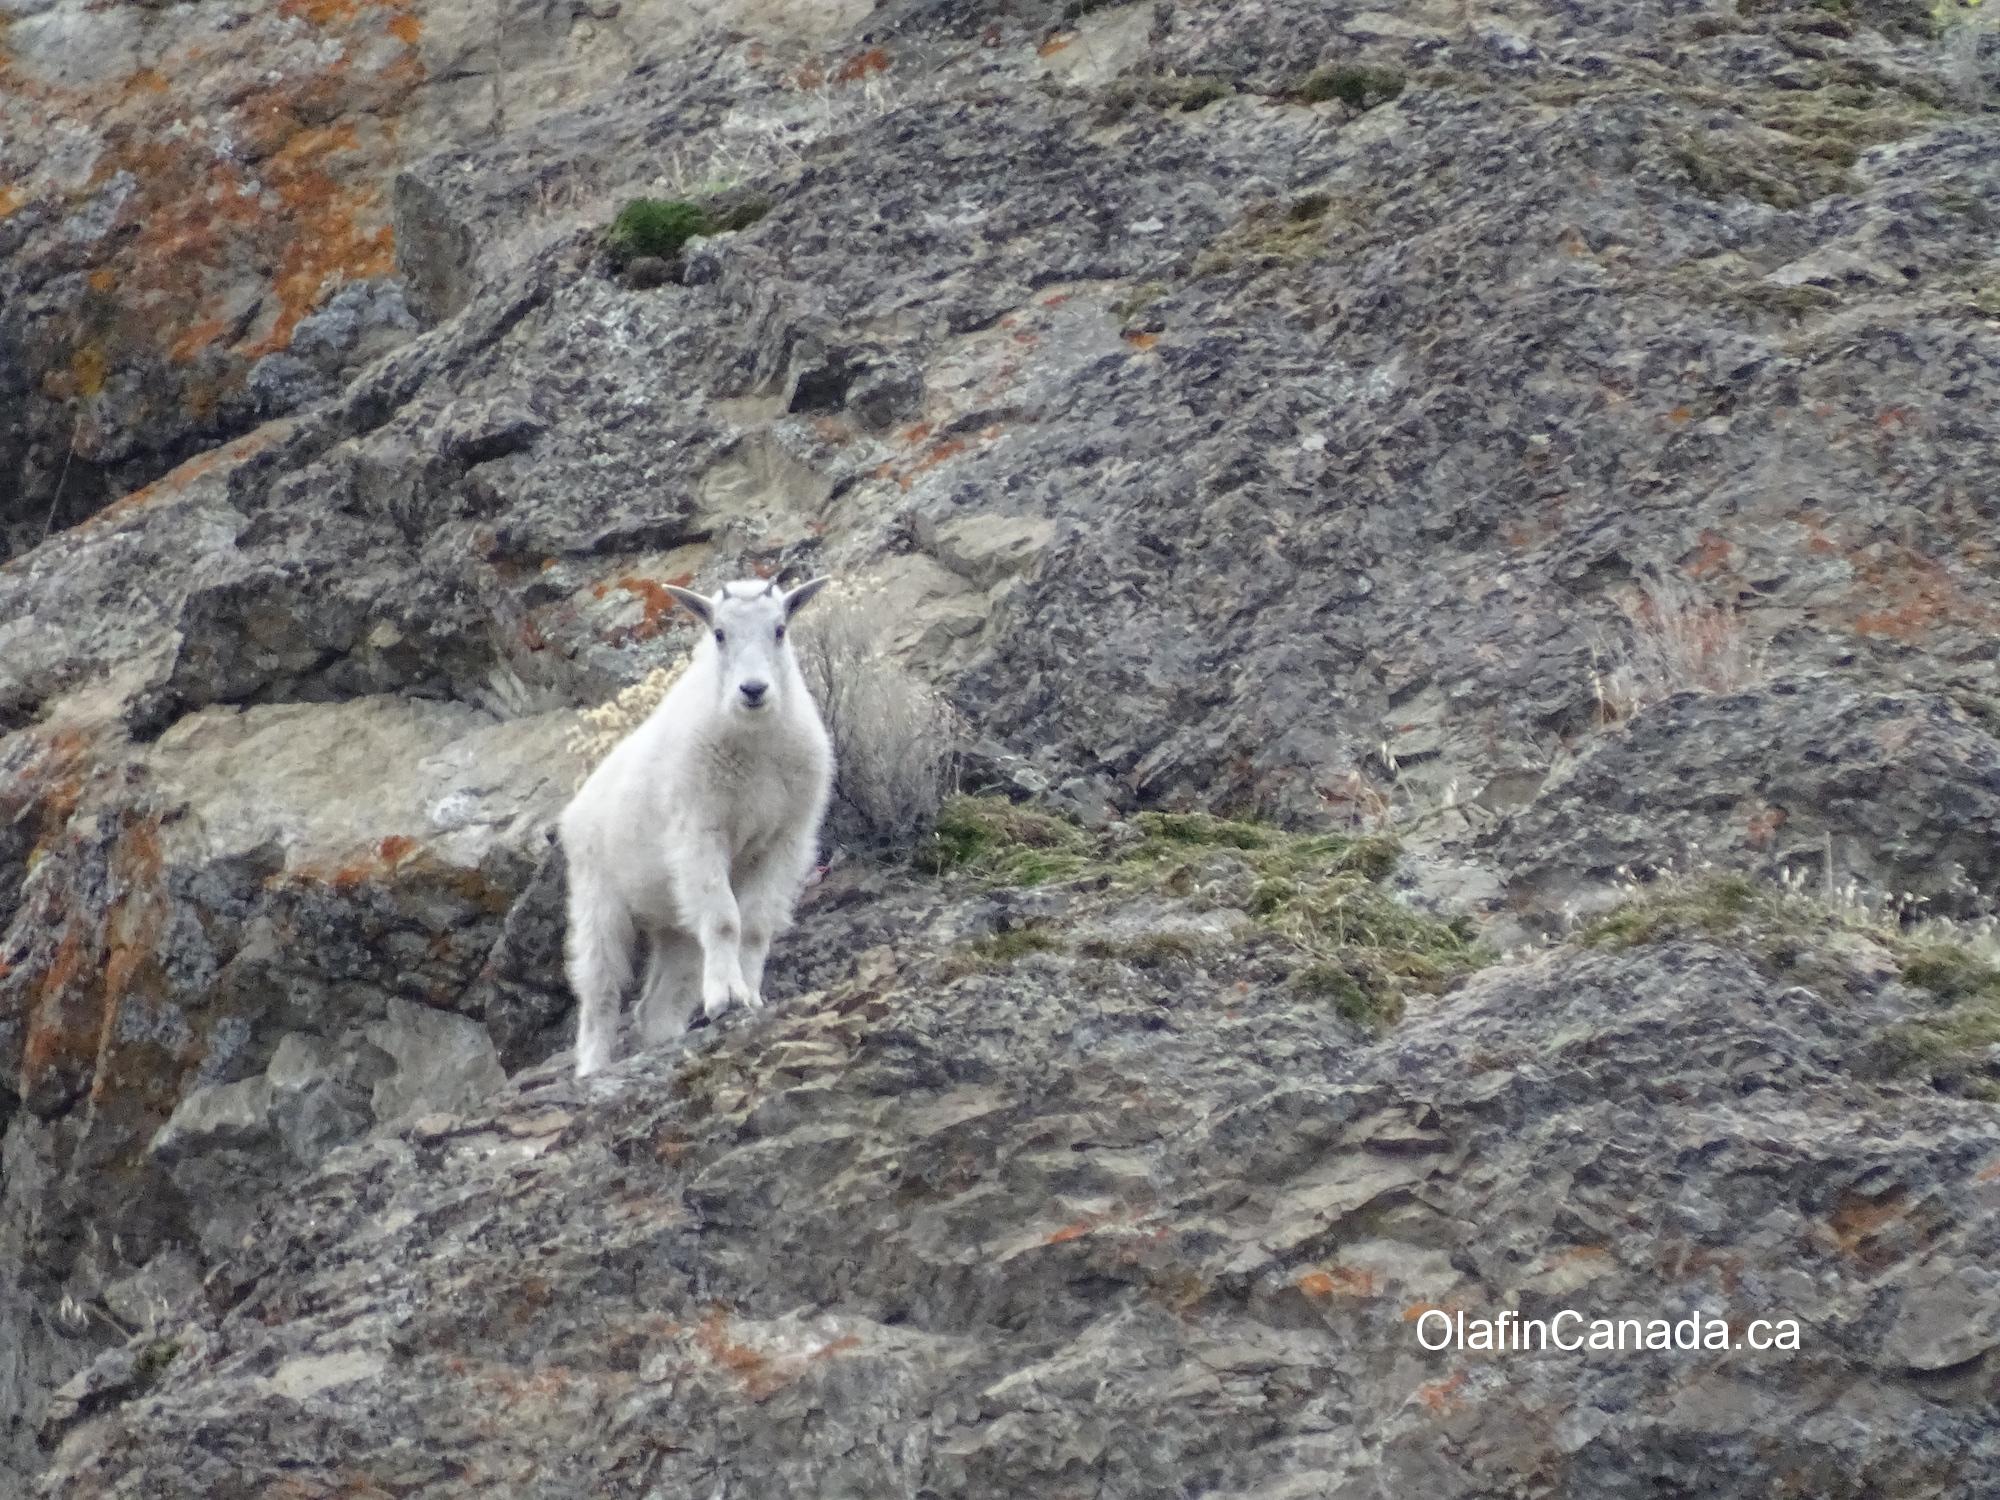 Mountain goat on rock near Summerland, Hwy 97 #olafincanada #britishcolumbia #discoverbc #wildlife #summerland #mountaingoat